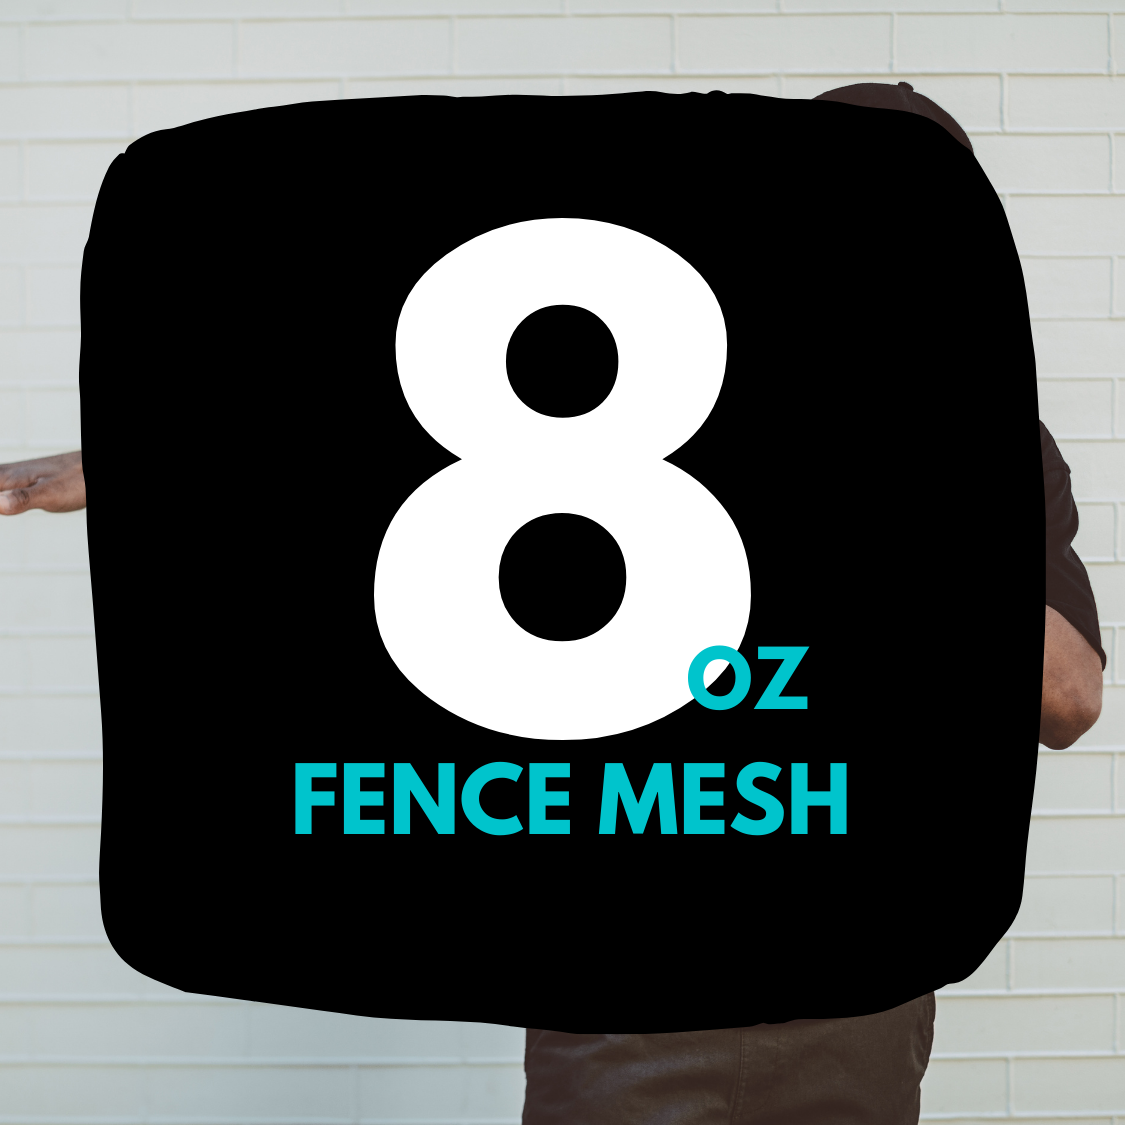 8oz fence mesh banner